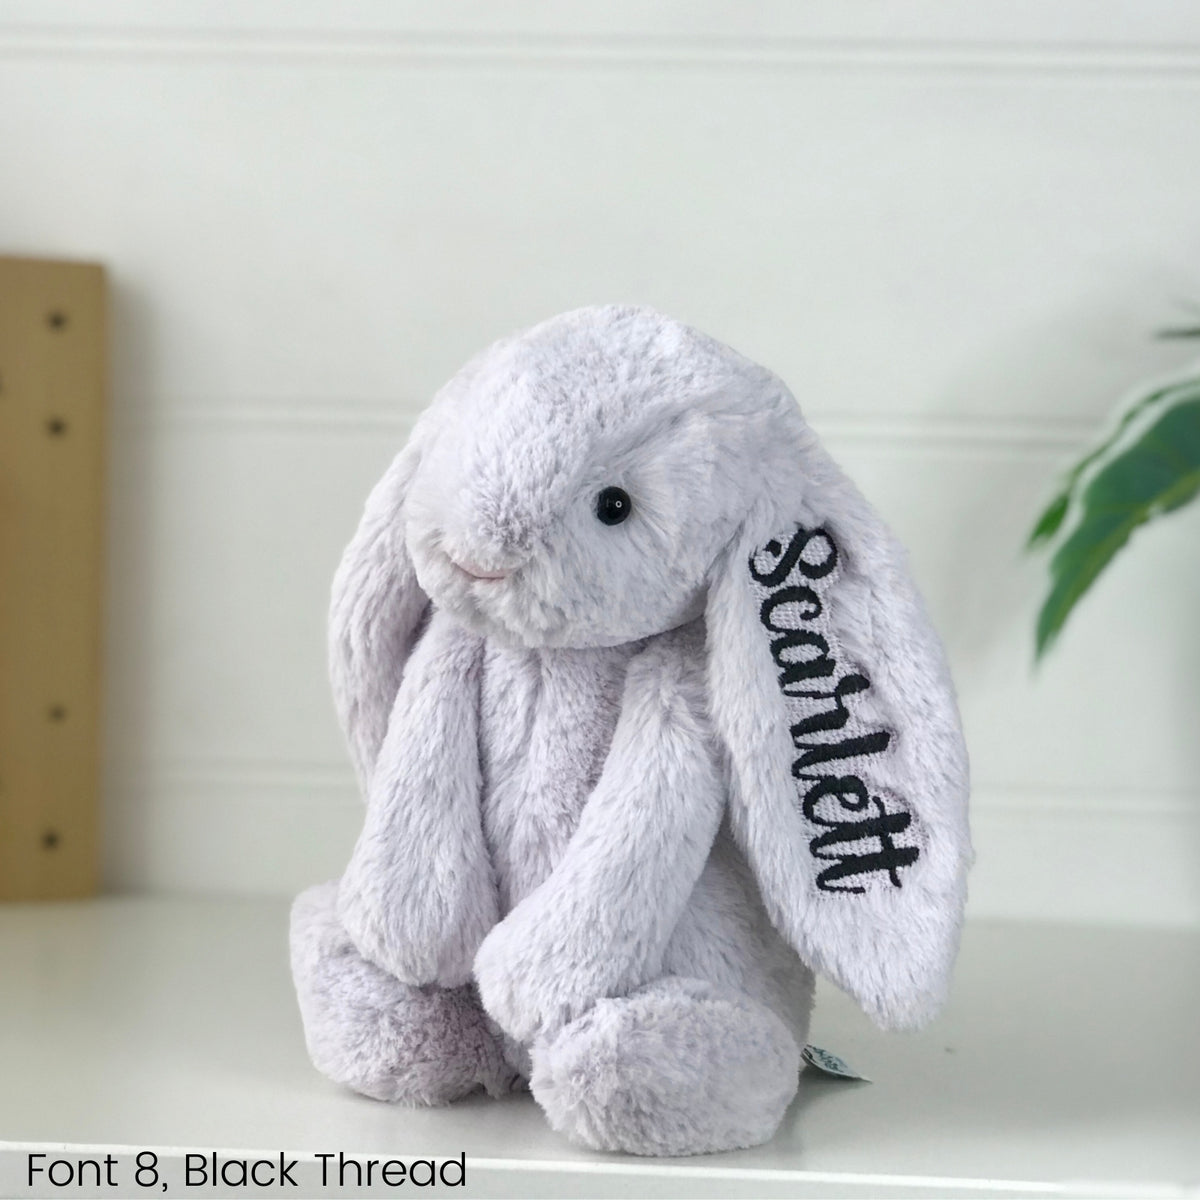 Personalised Jellycat Easter Bunny Gift Australia NZ Lavender Medium